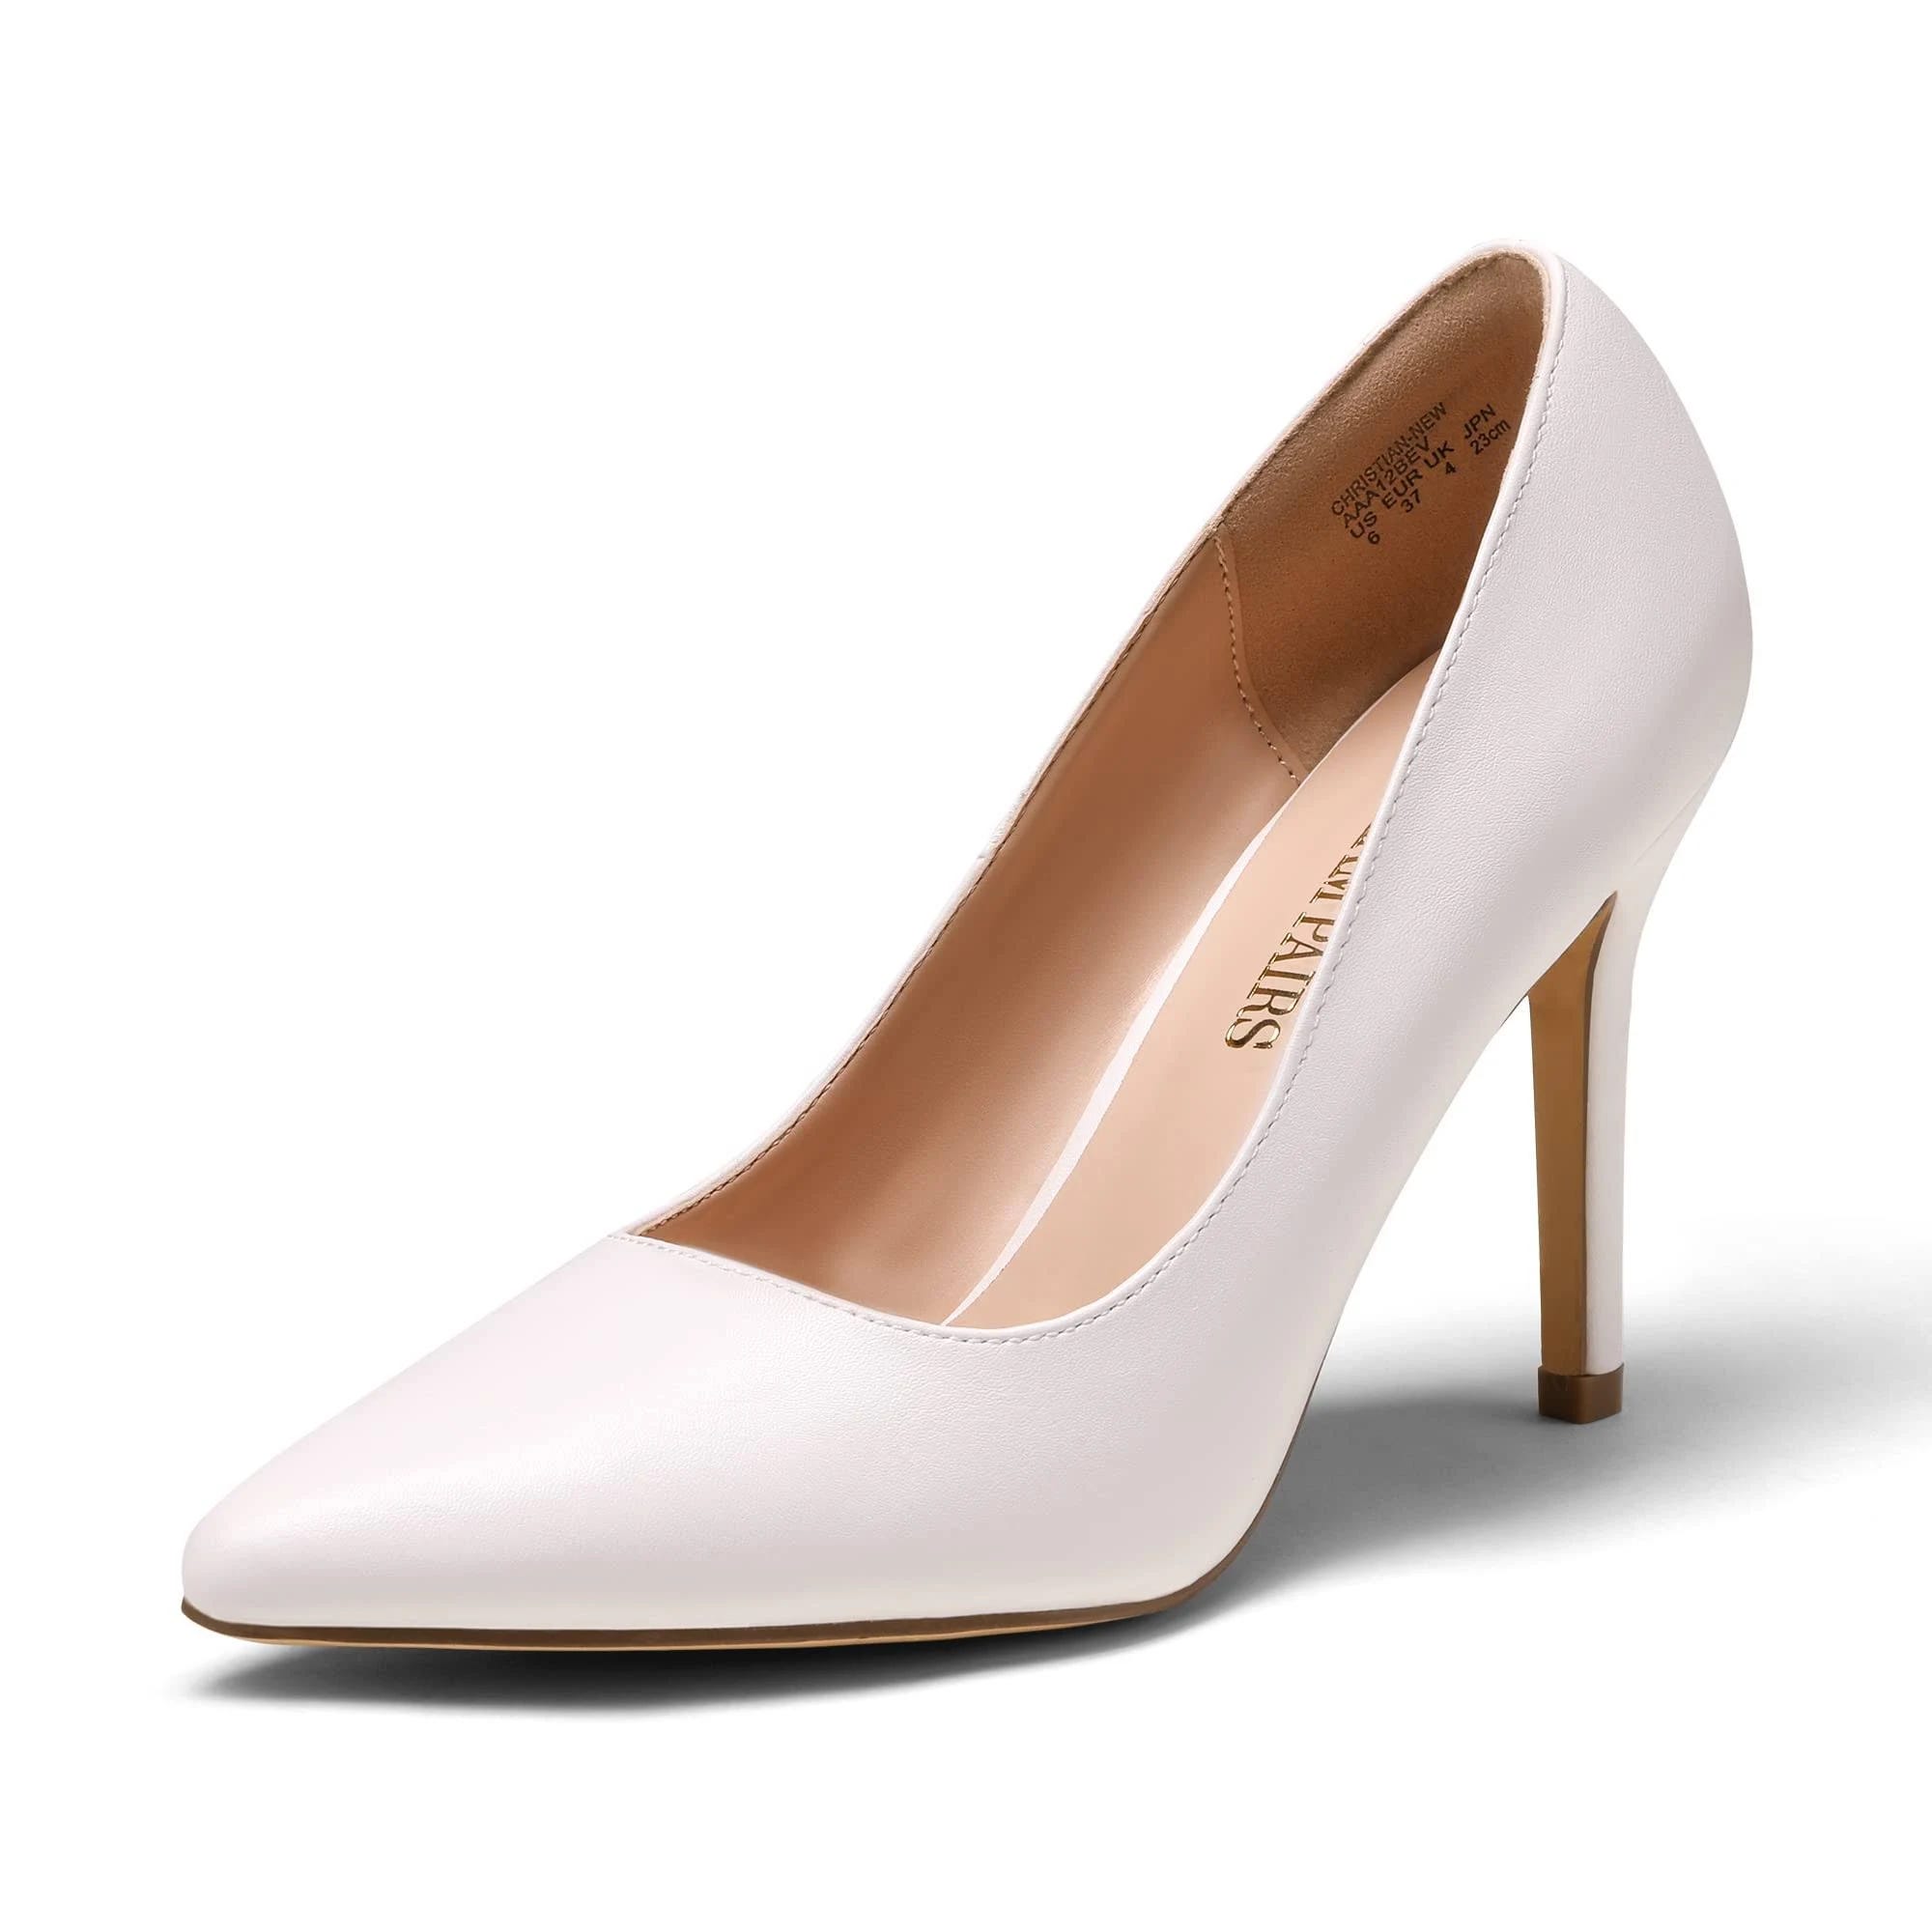 Stylish Chic White Heels with Anti-Slip Outsole | Image